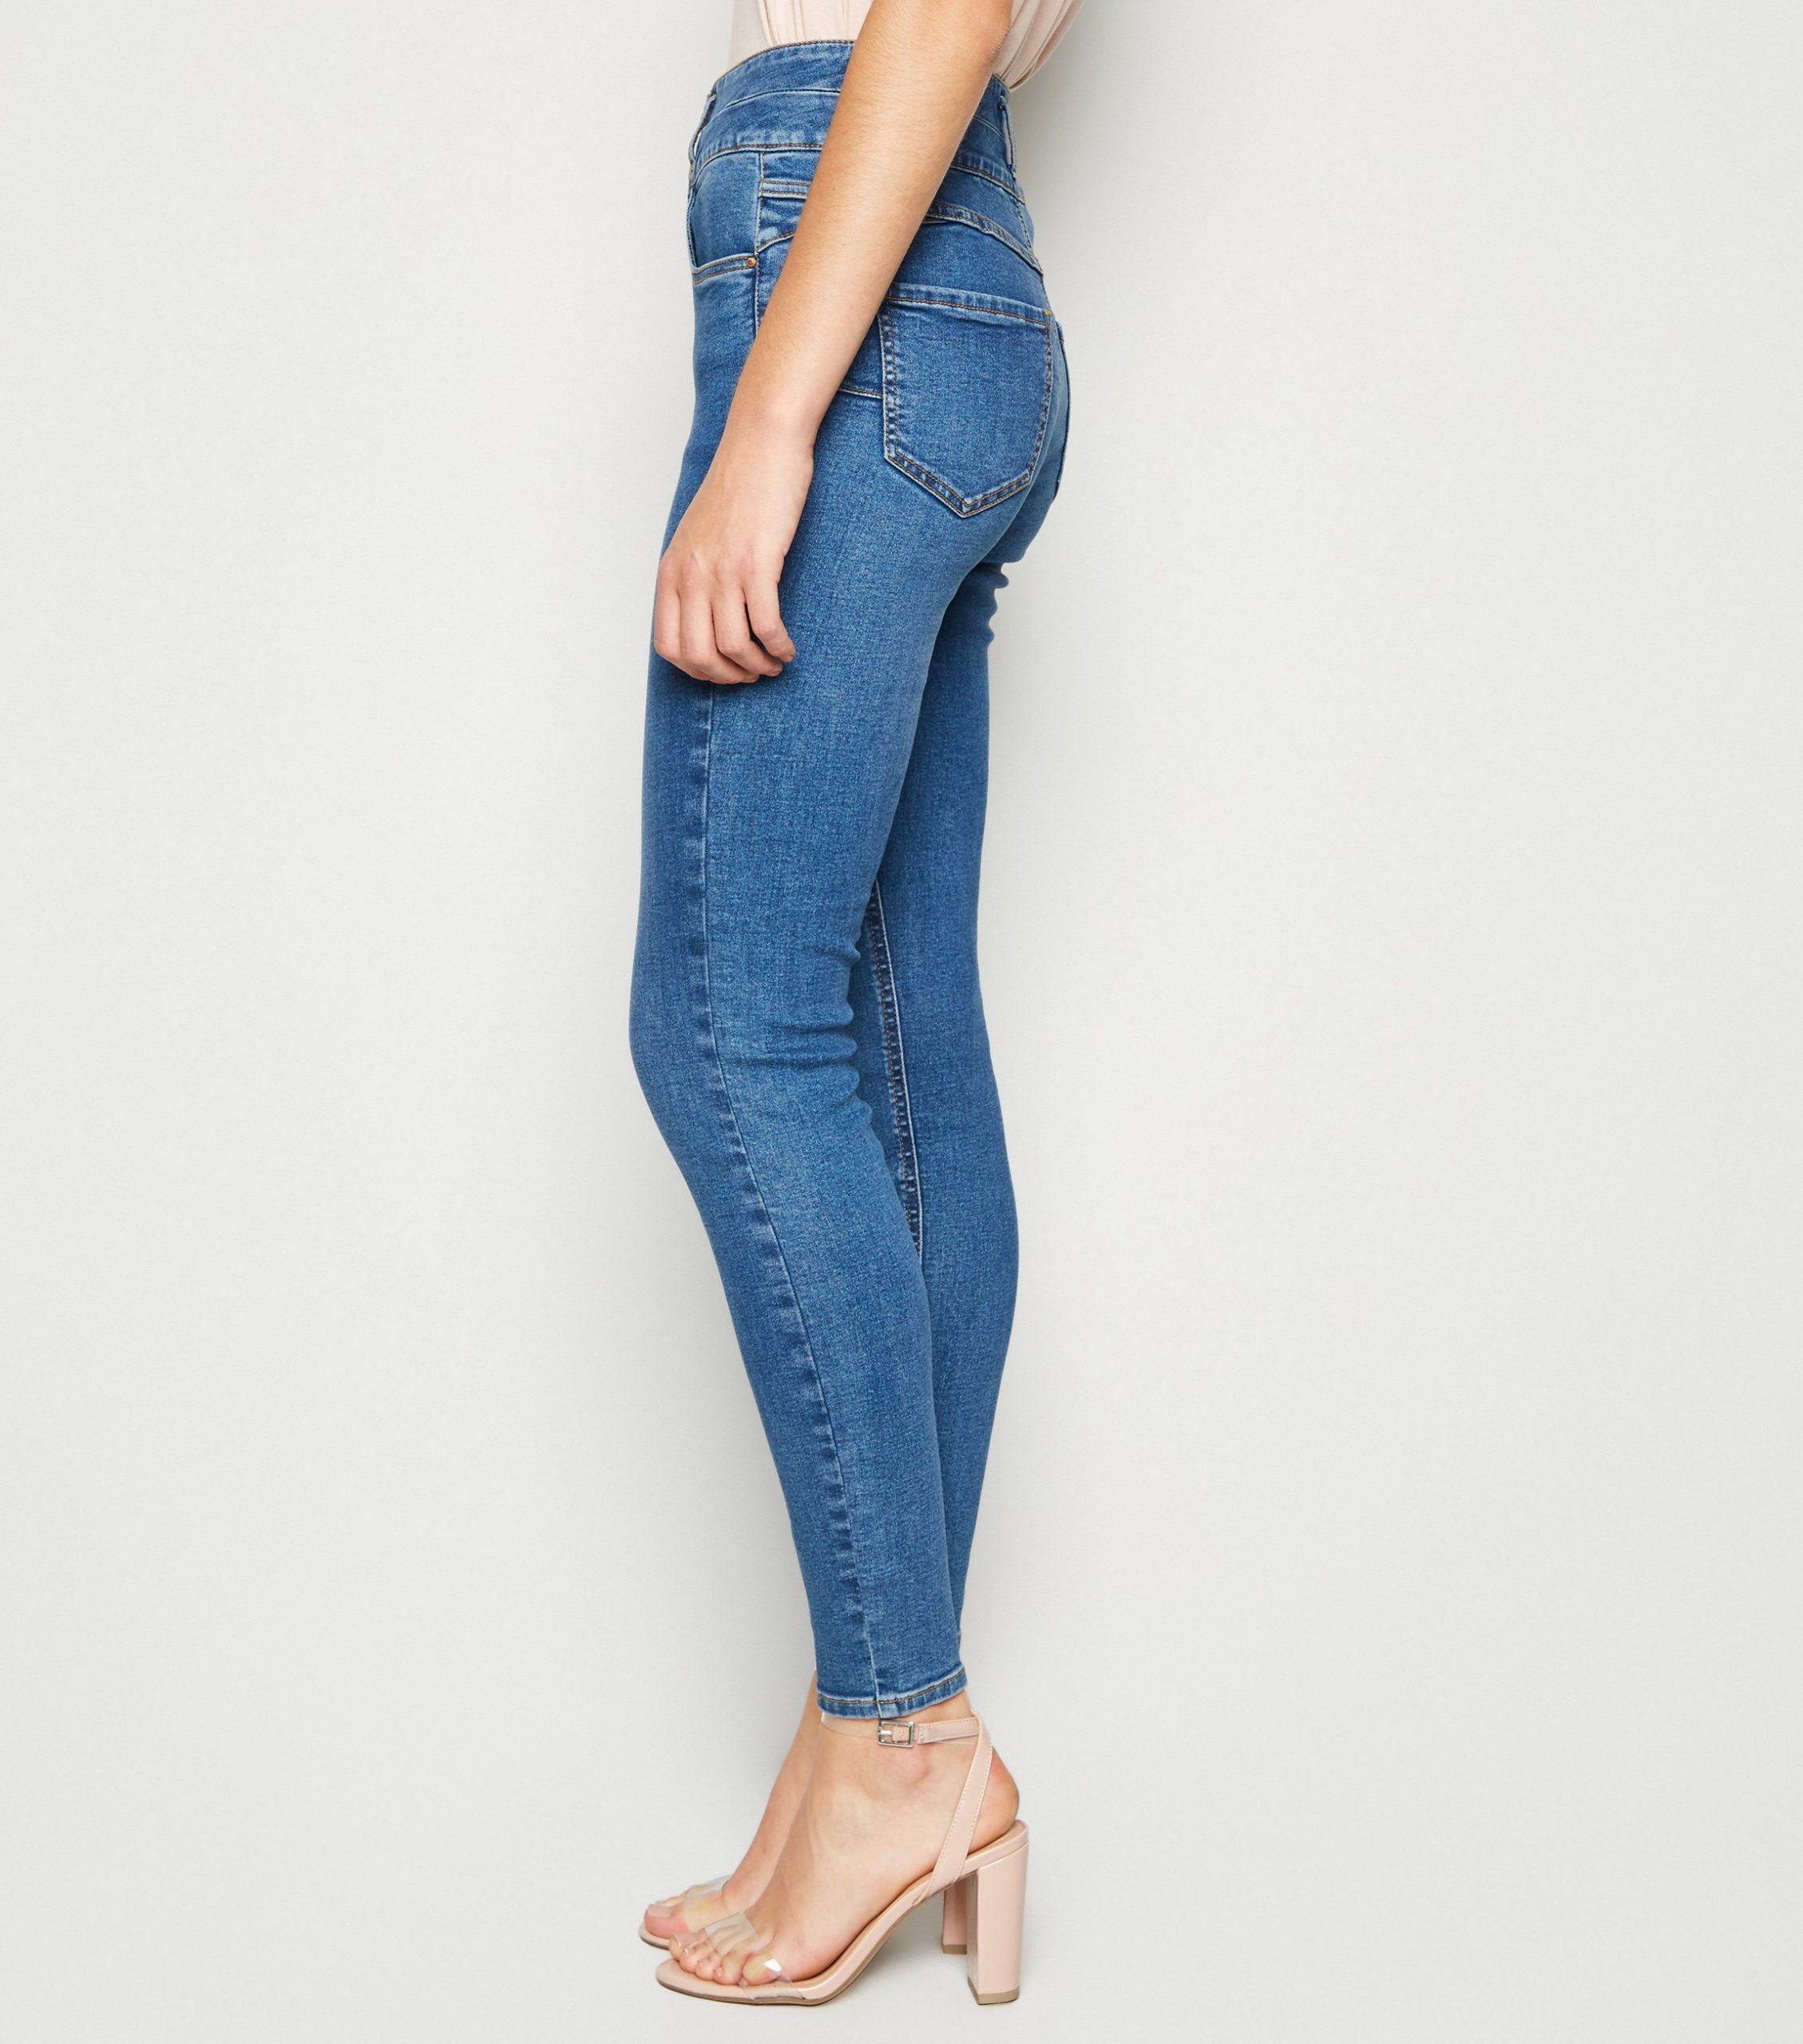 Women's Bright Blue High Waist Skinny blue jean | AA Sourcing LTD